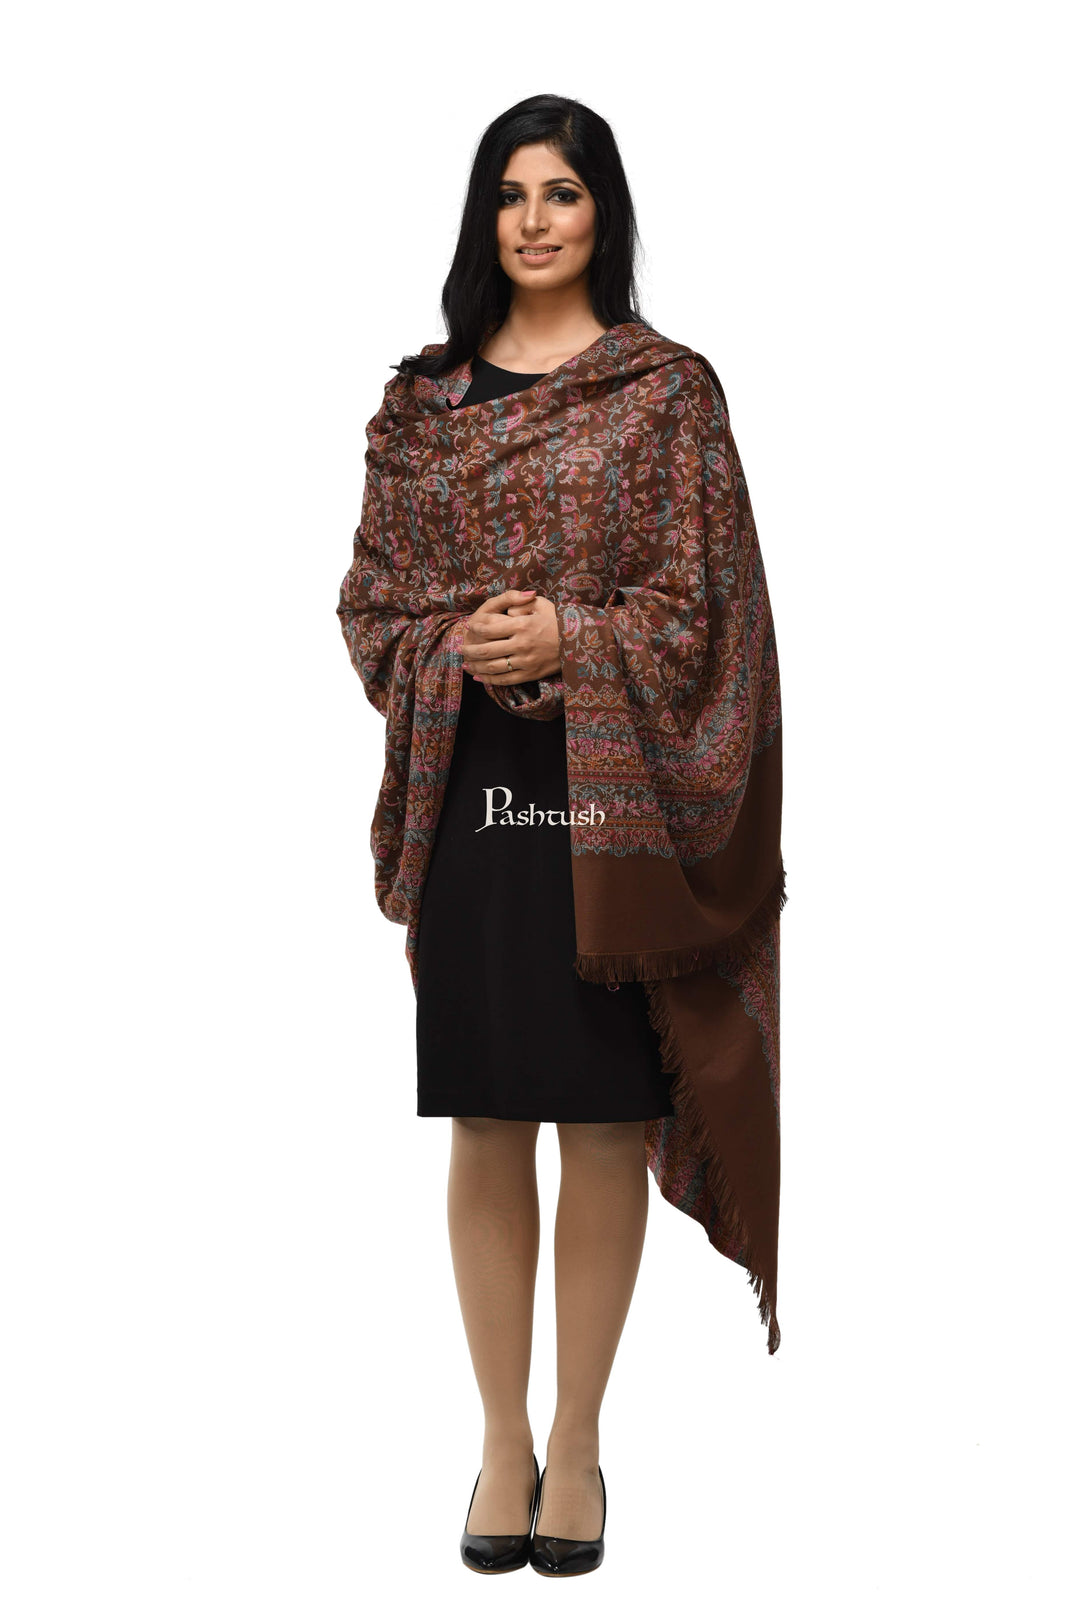 Pashwool Womens Shawls Pashwool Womens Ethnic Design Shawl, Light Weight, Soft And Warm, Sahara